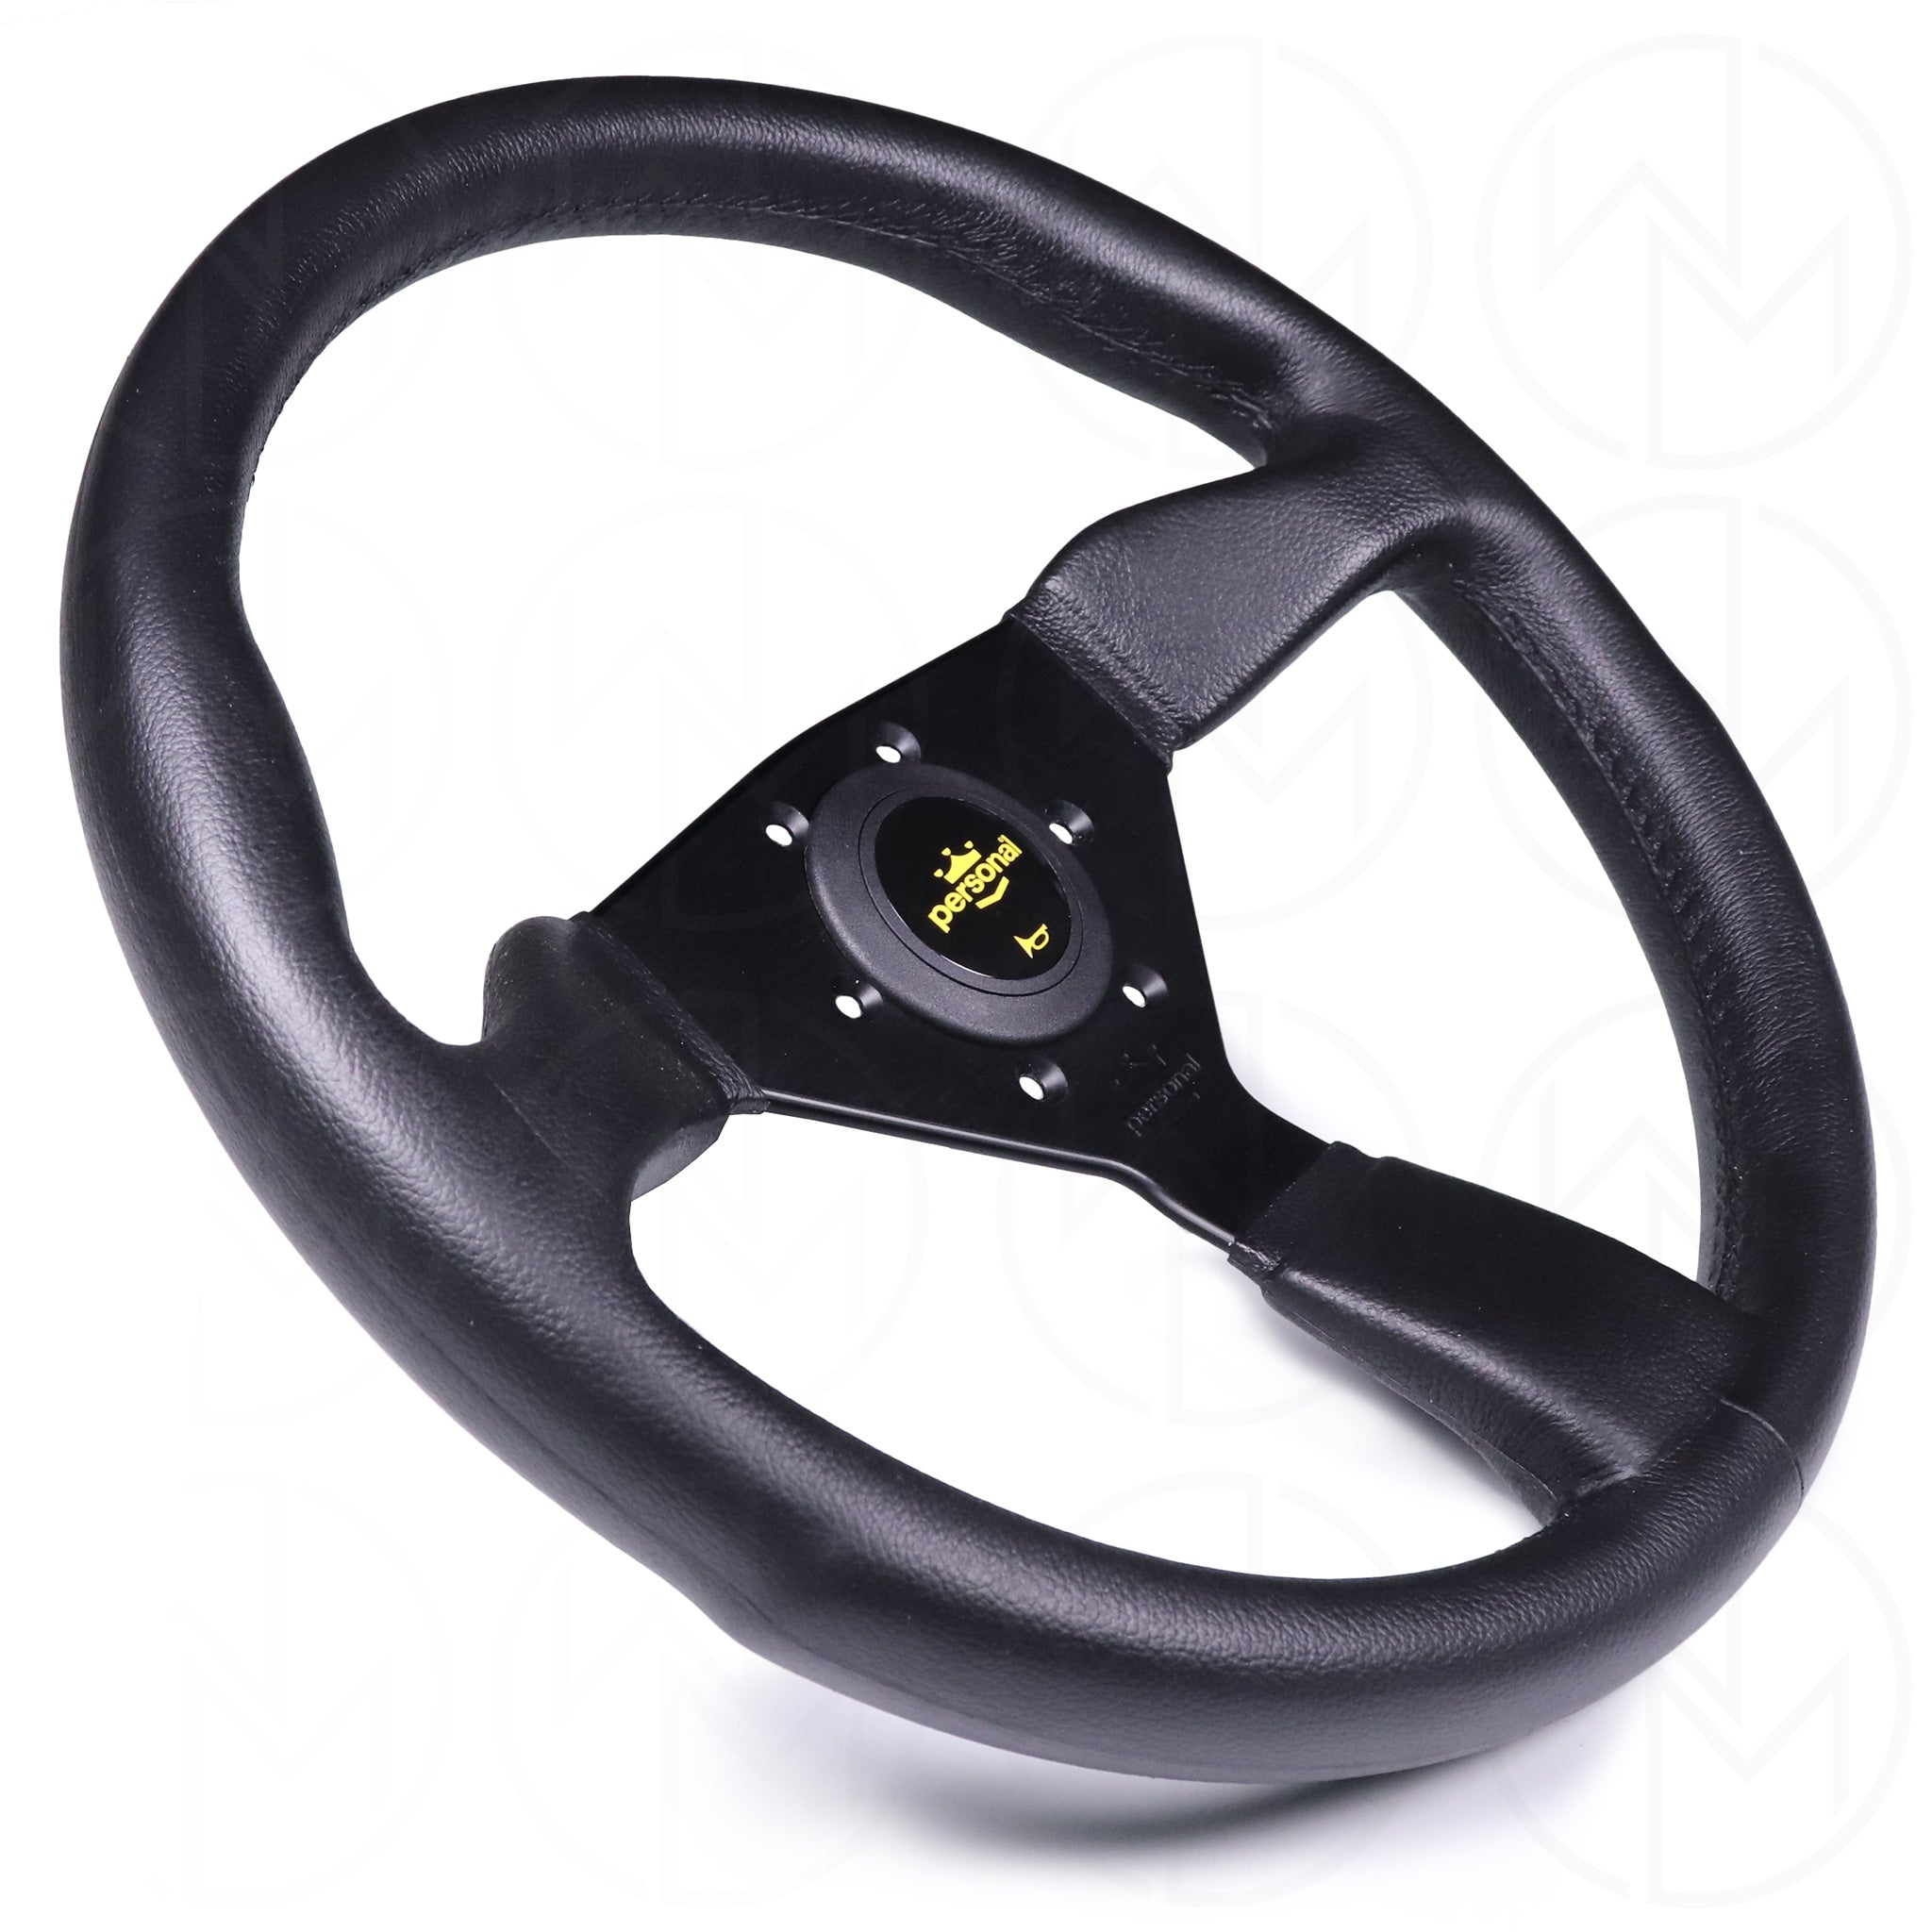 Personal Grinta P/U Steering Wheel - 350mm Polyurethane w/Yellow Horn Button